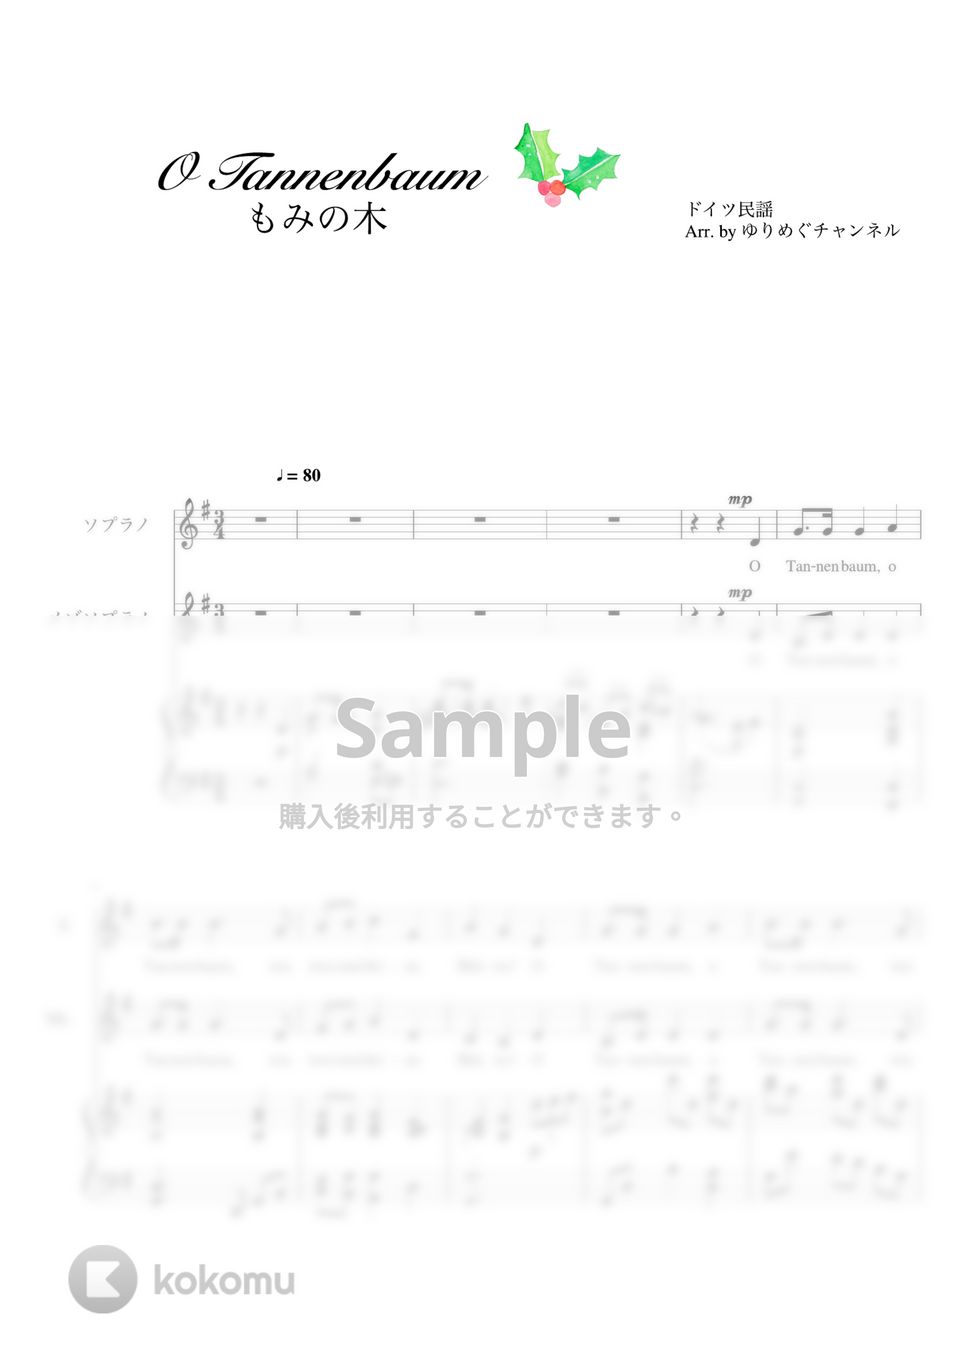 O Tannenbaum(もみの木)声楽二声によるクリスマスソング by ゆりめぐチャンネル